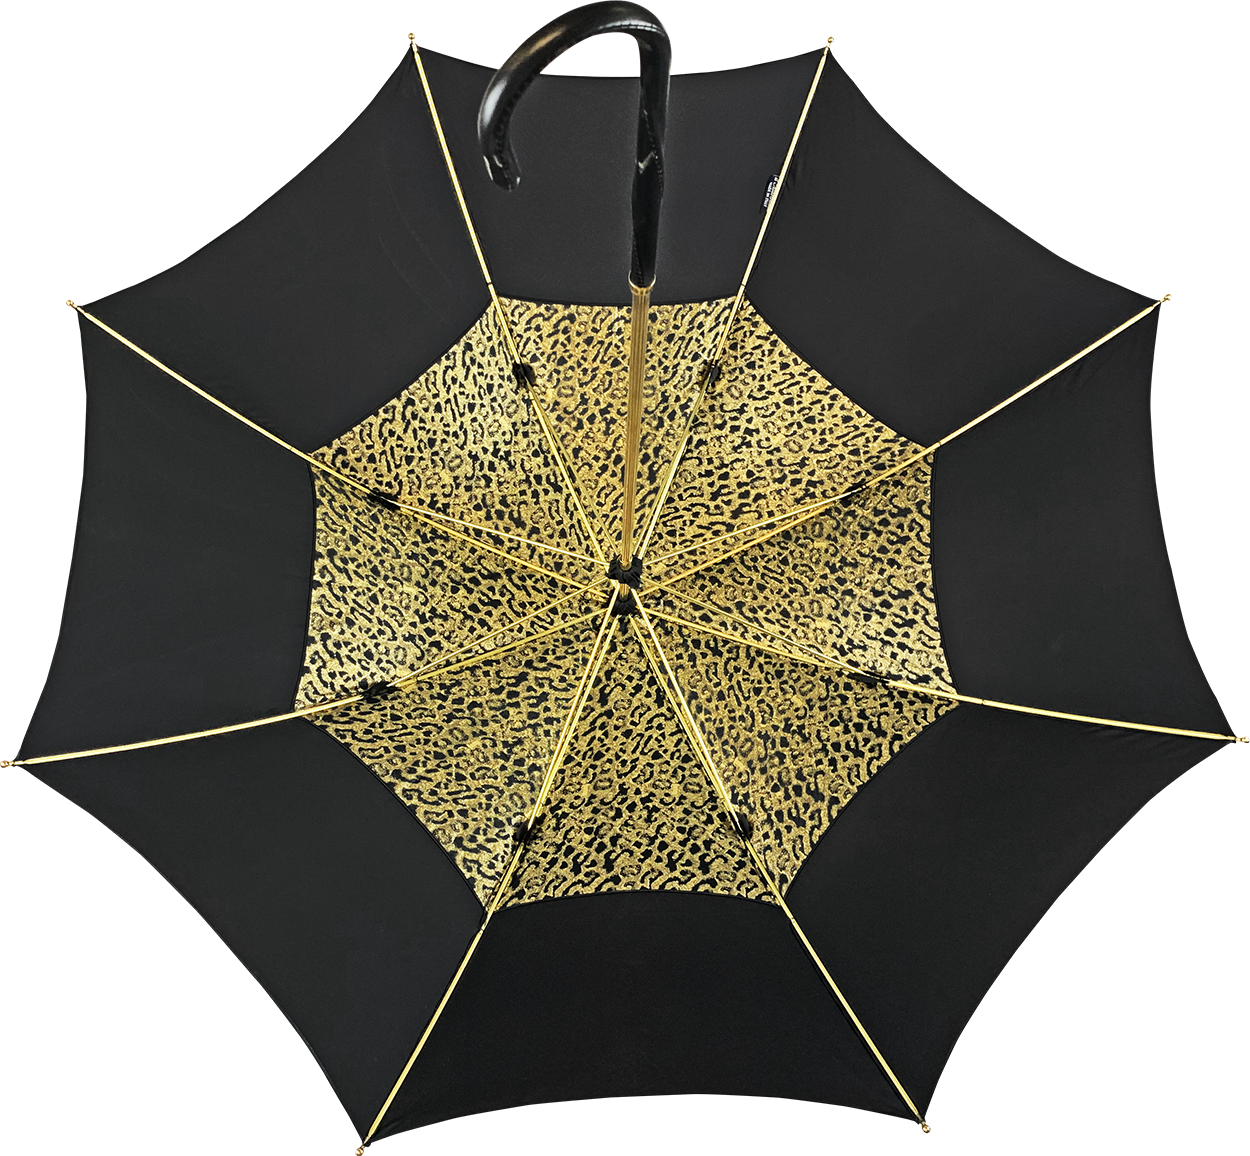 New Gold Lurex Fabric Women's Umbrella